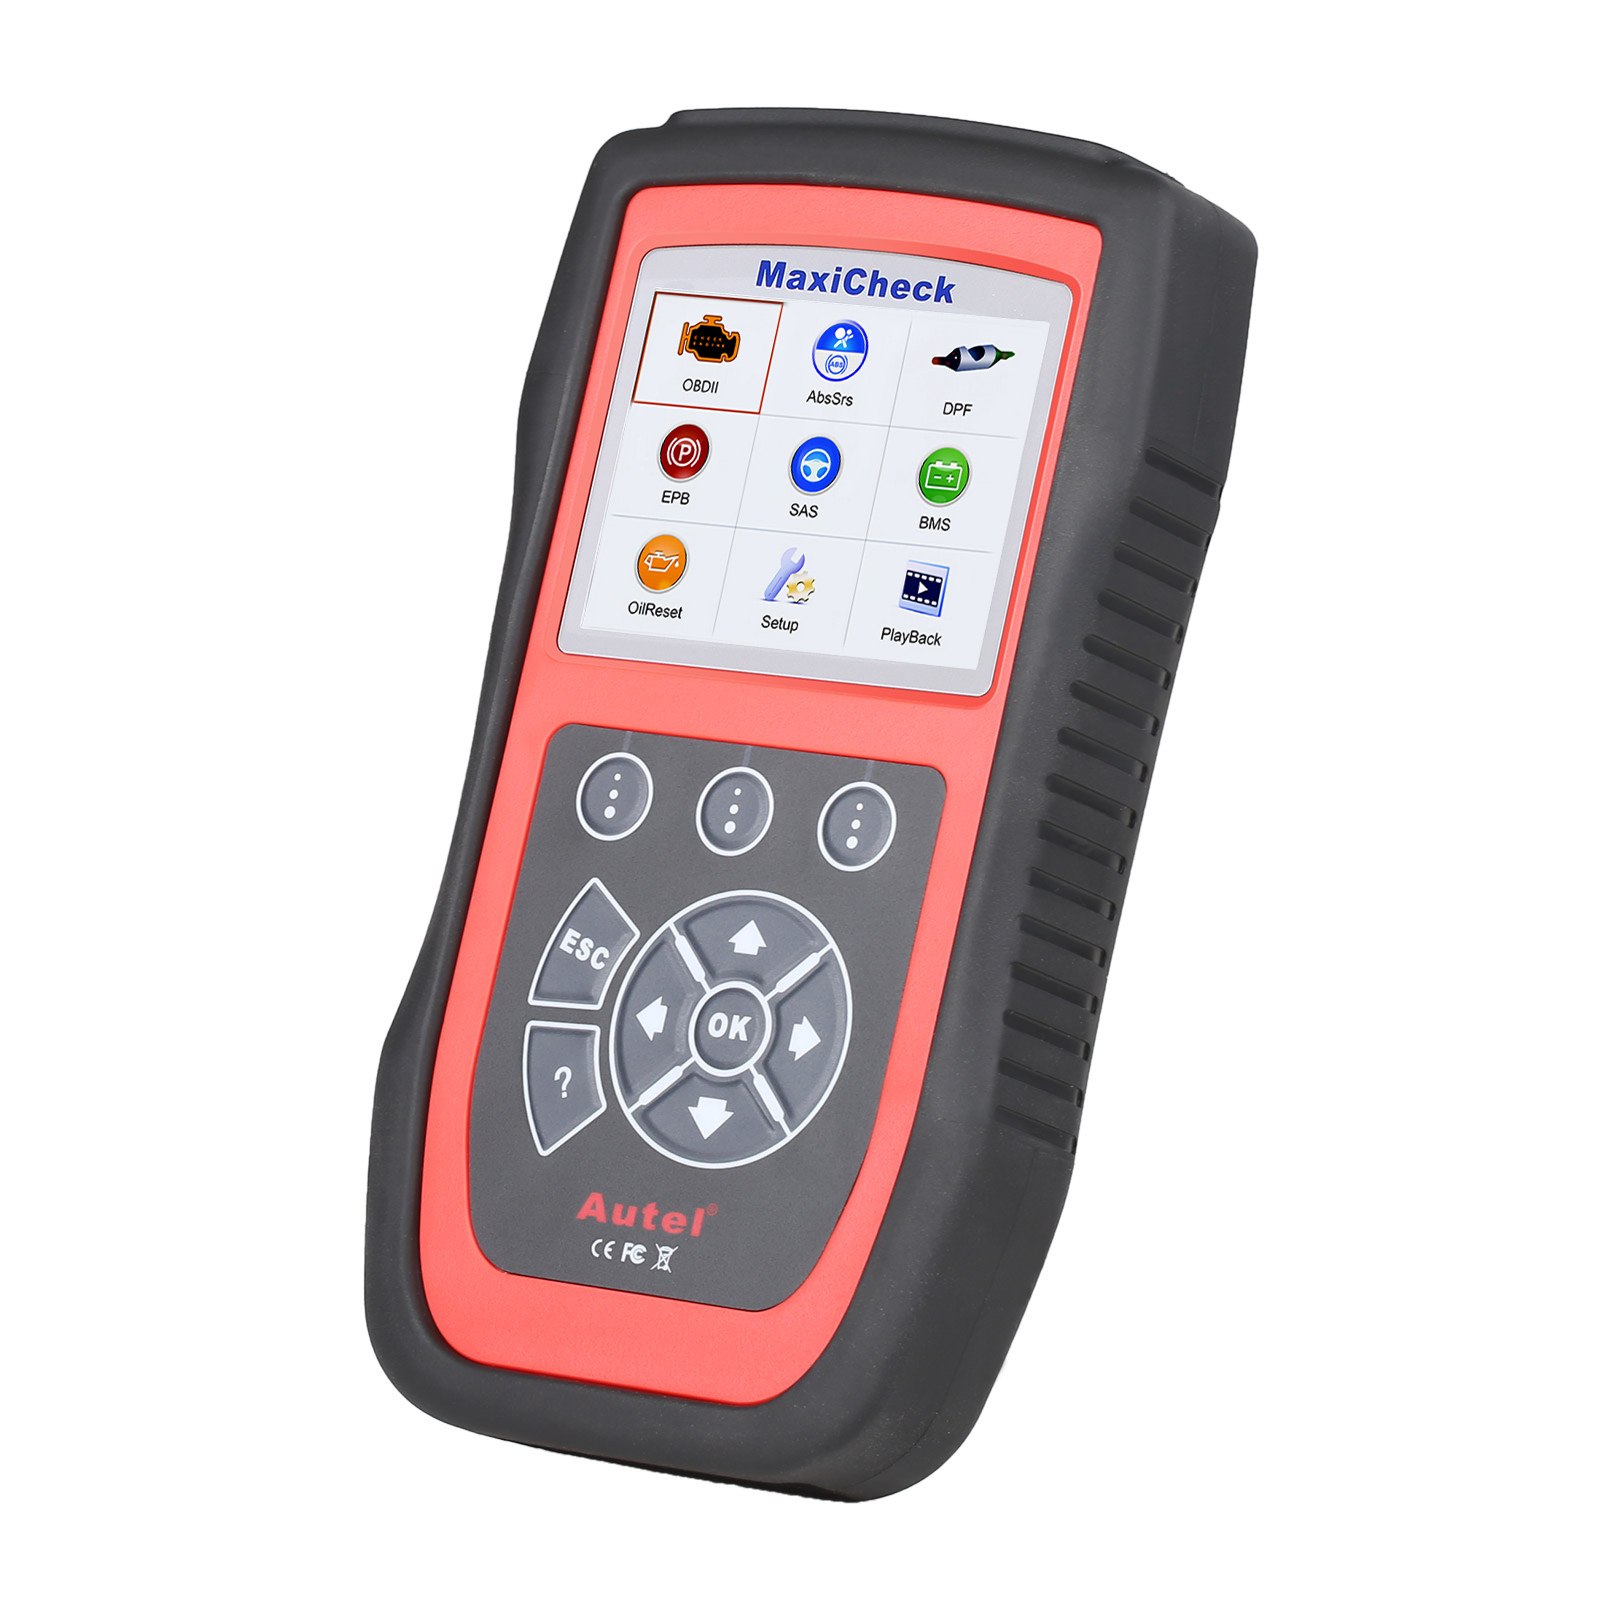 Original AUTEL MaxiCheck Pro Diagnostic Code Reader Scanner Tool OBD2 EPB ABS US